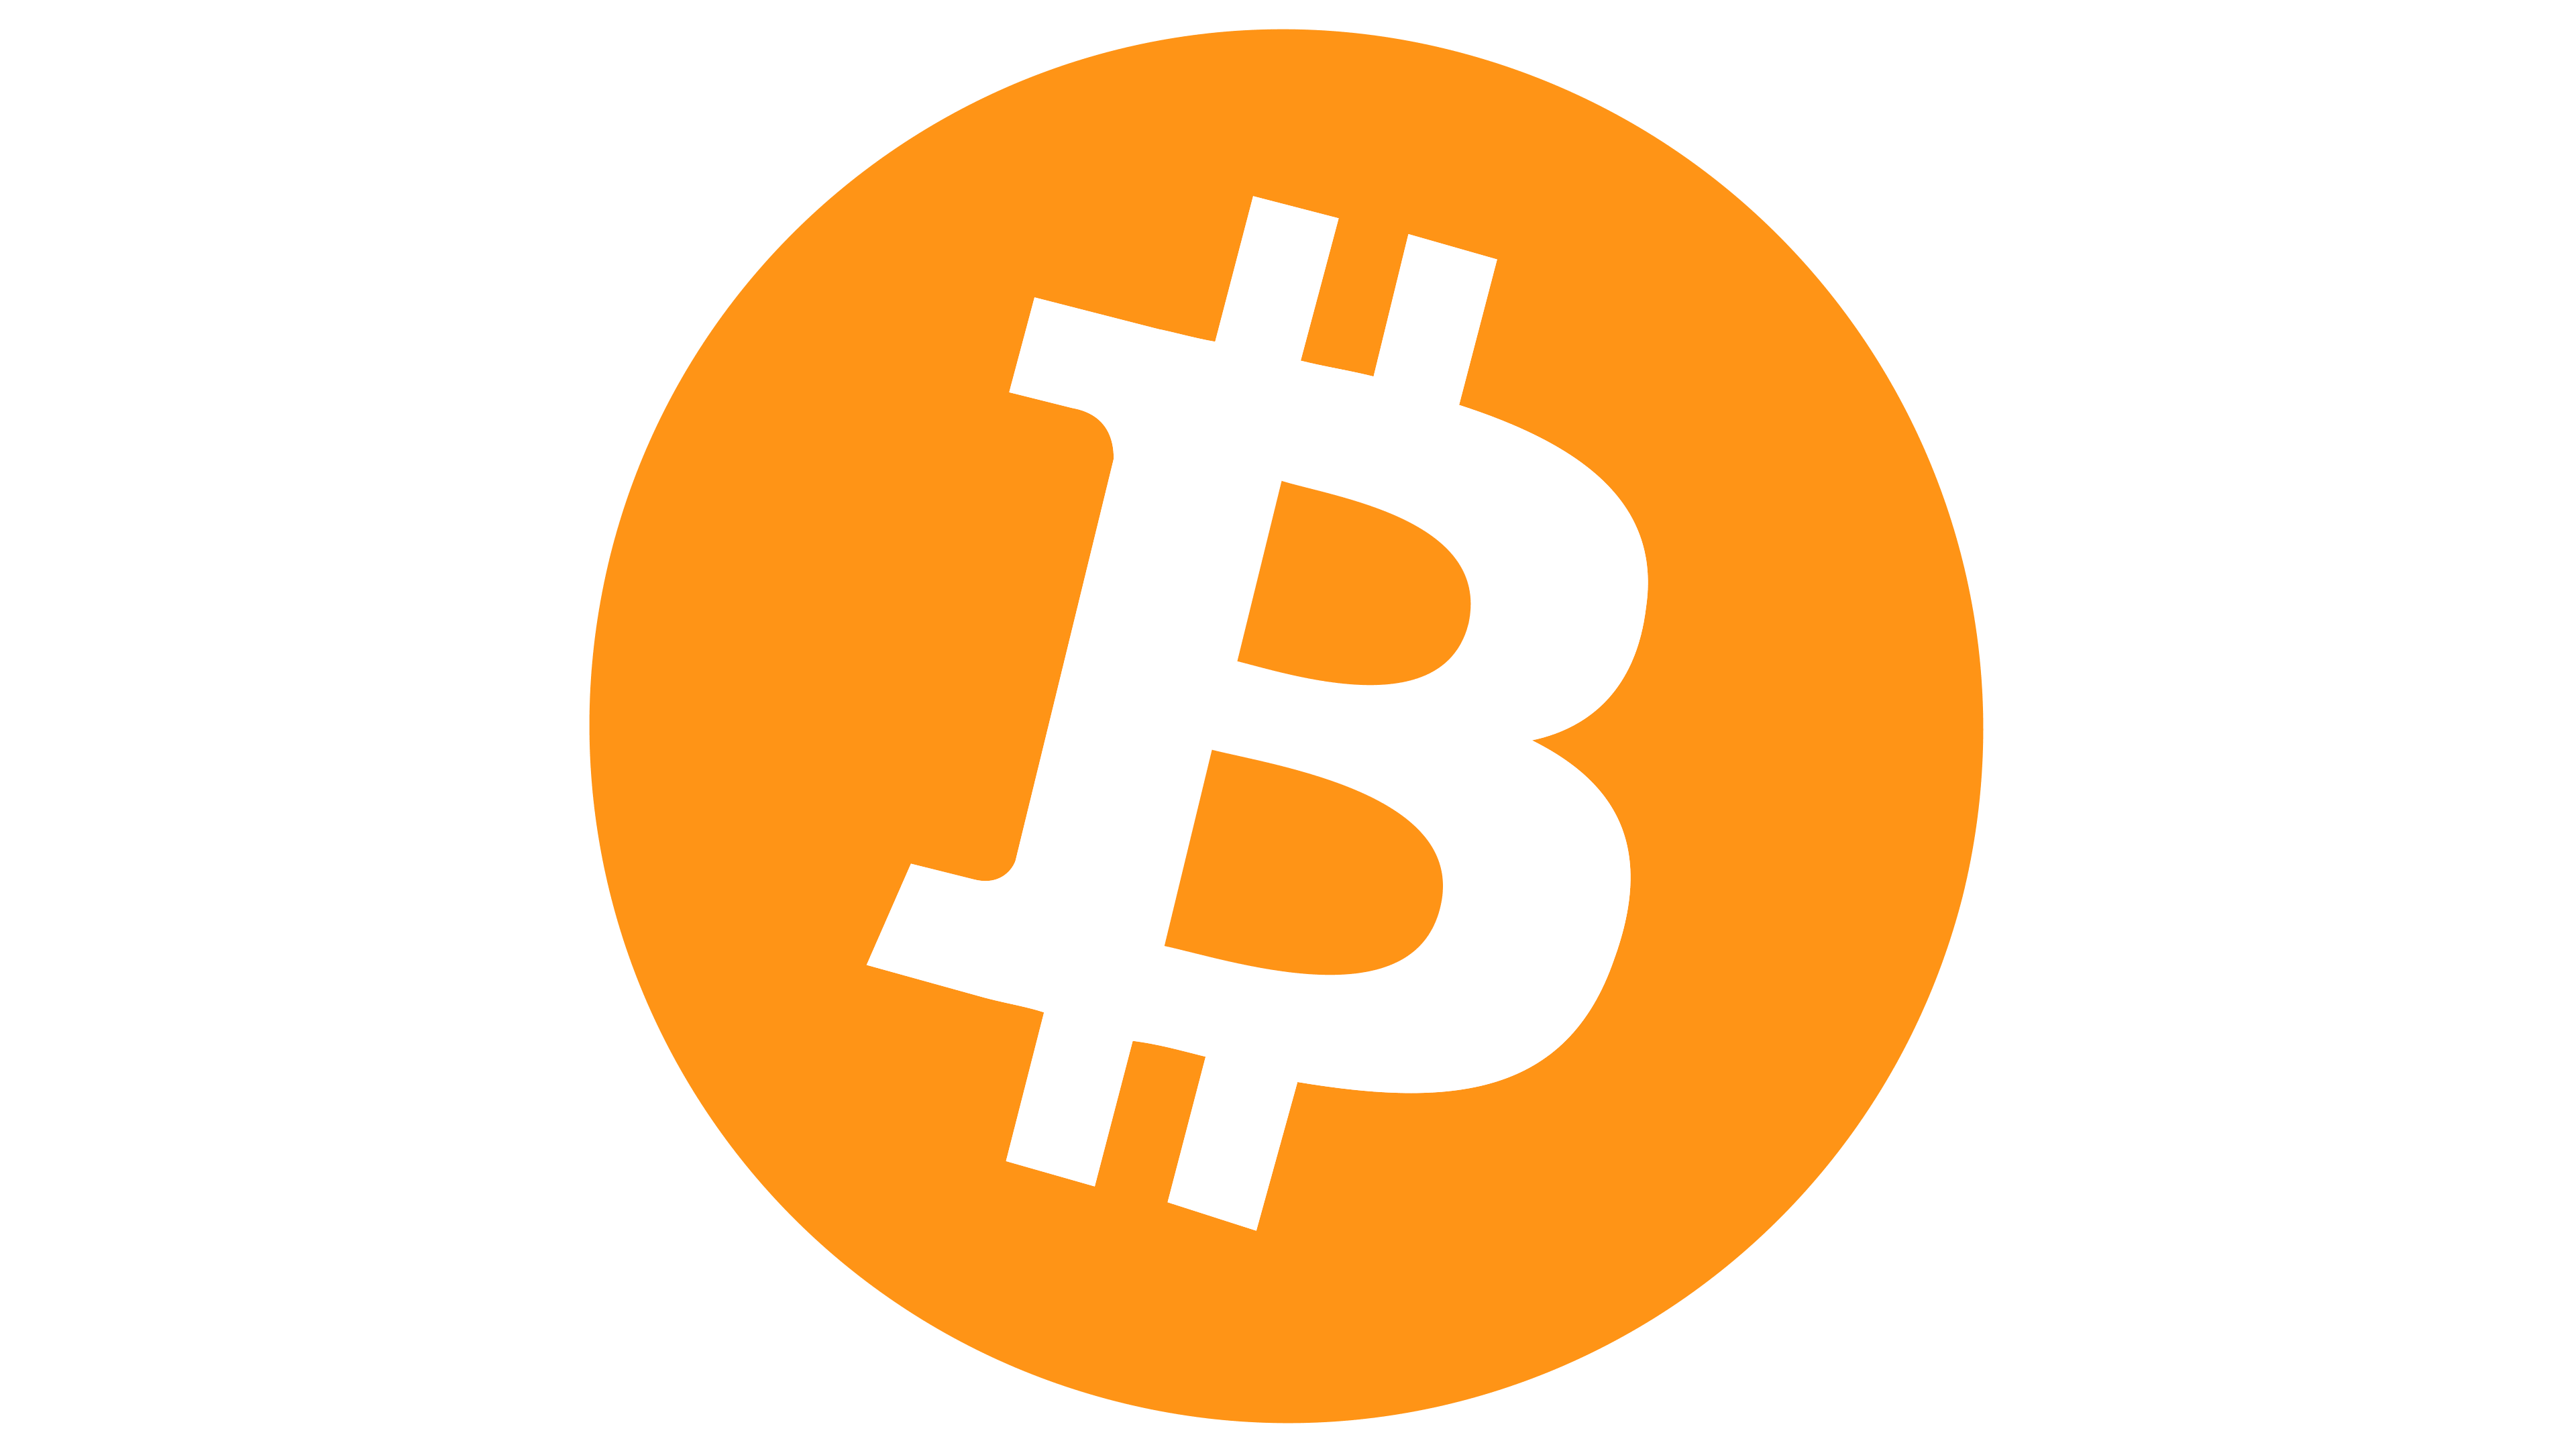 how to buy bitcoin ico